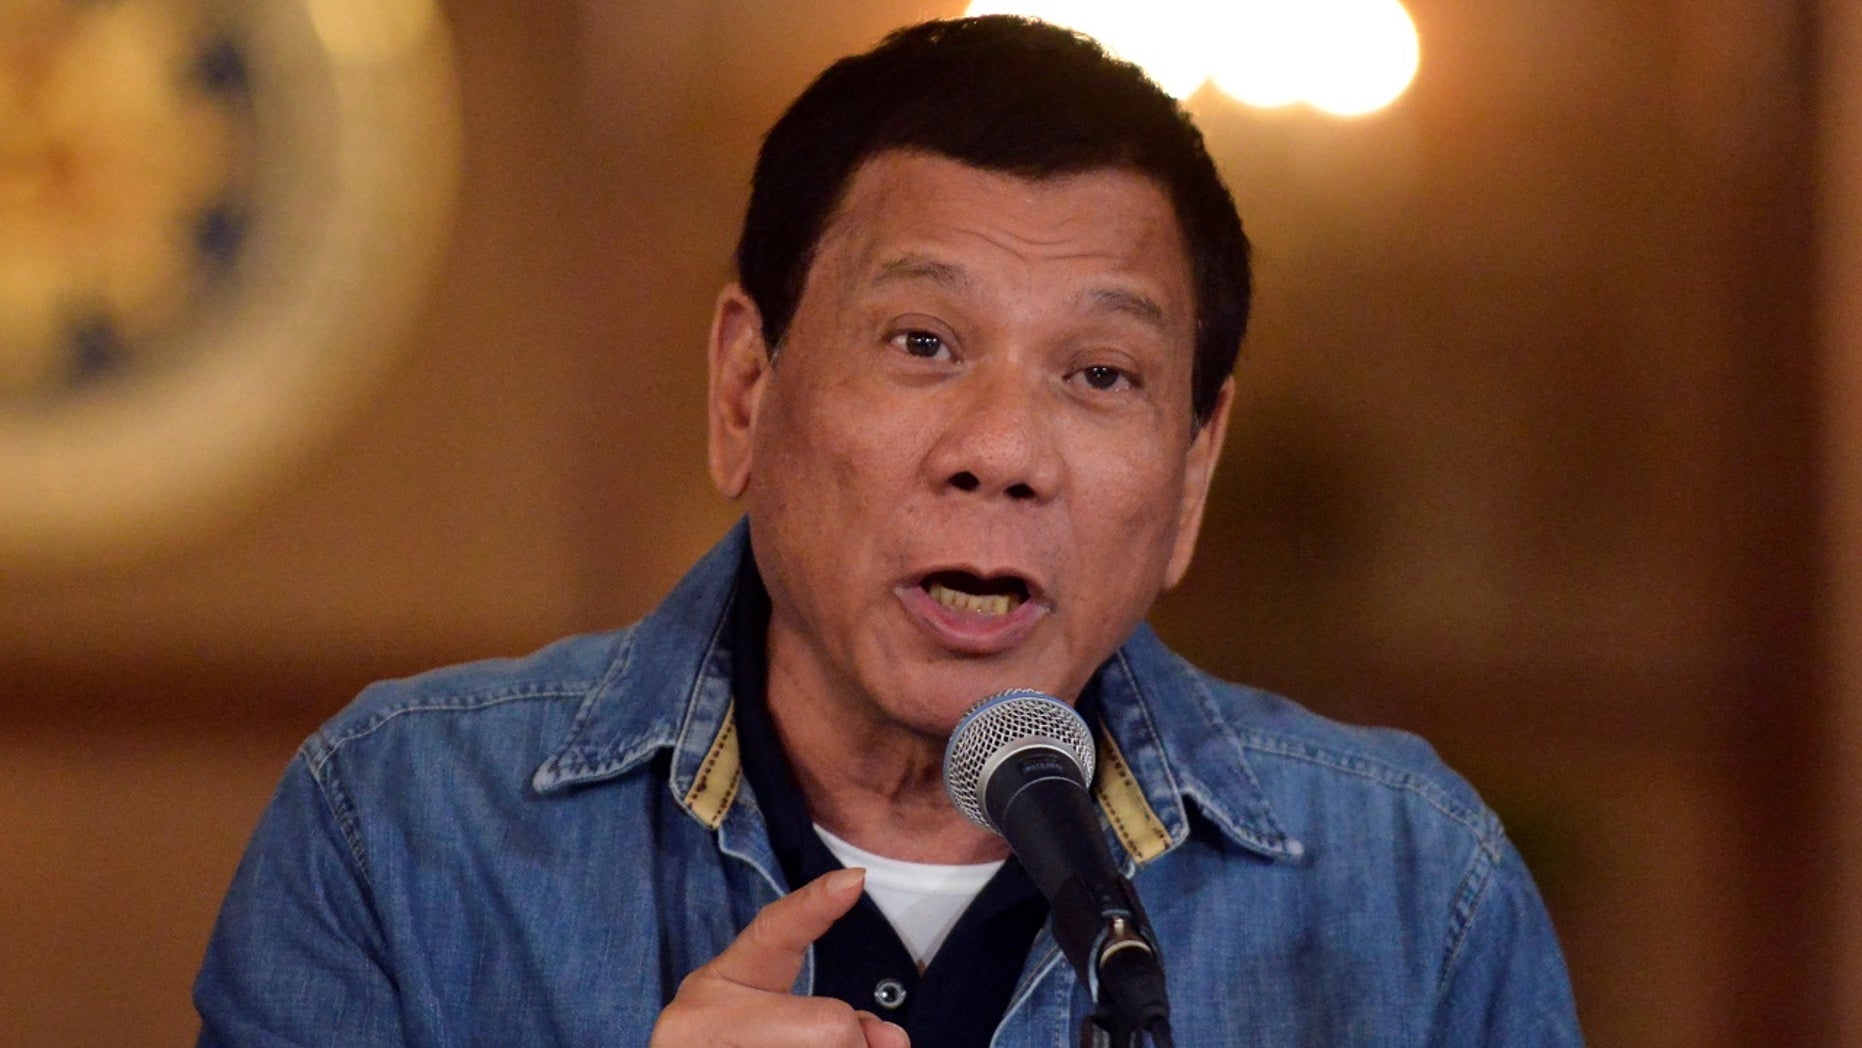 Philippines president jokes about sex assault during speech